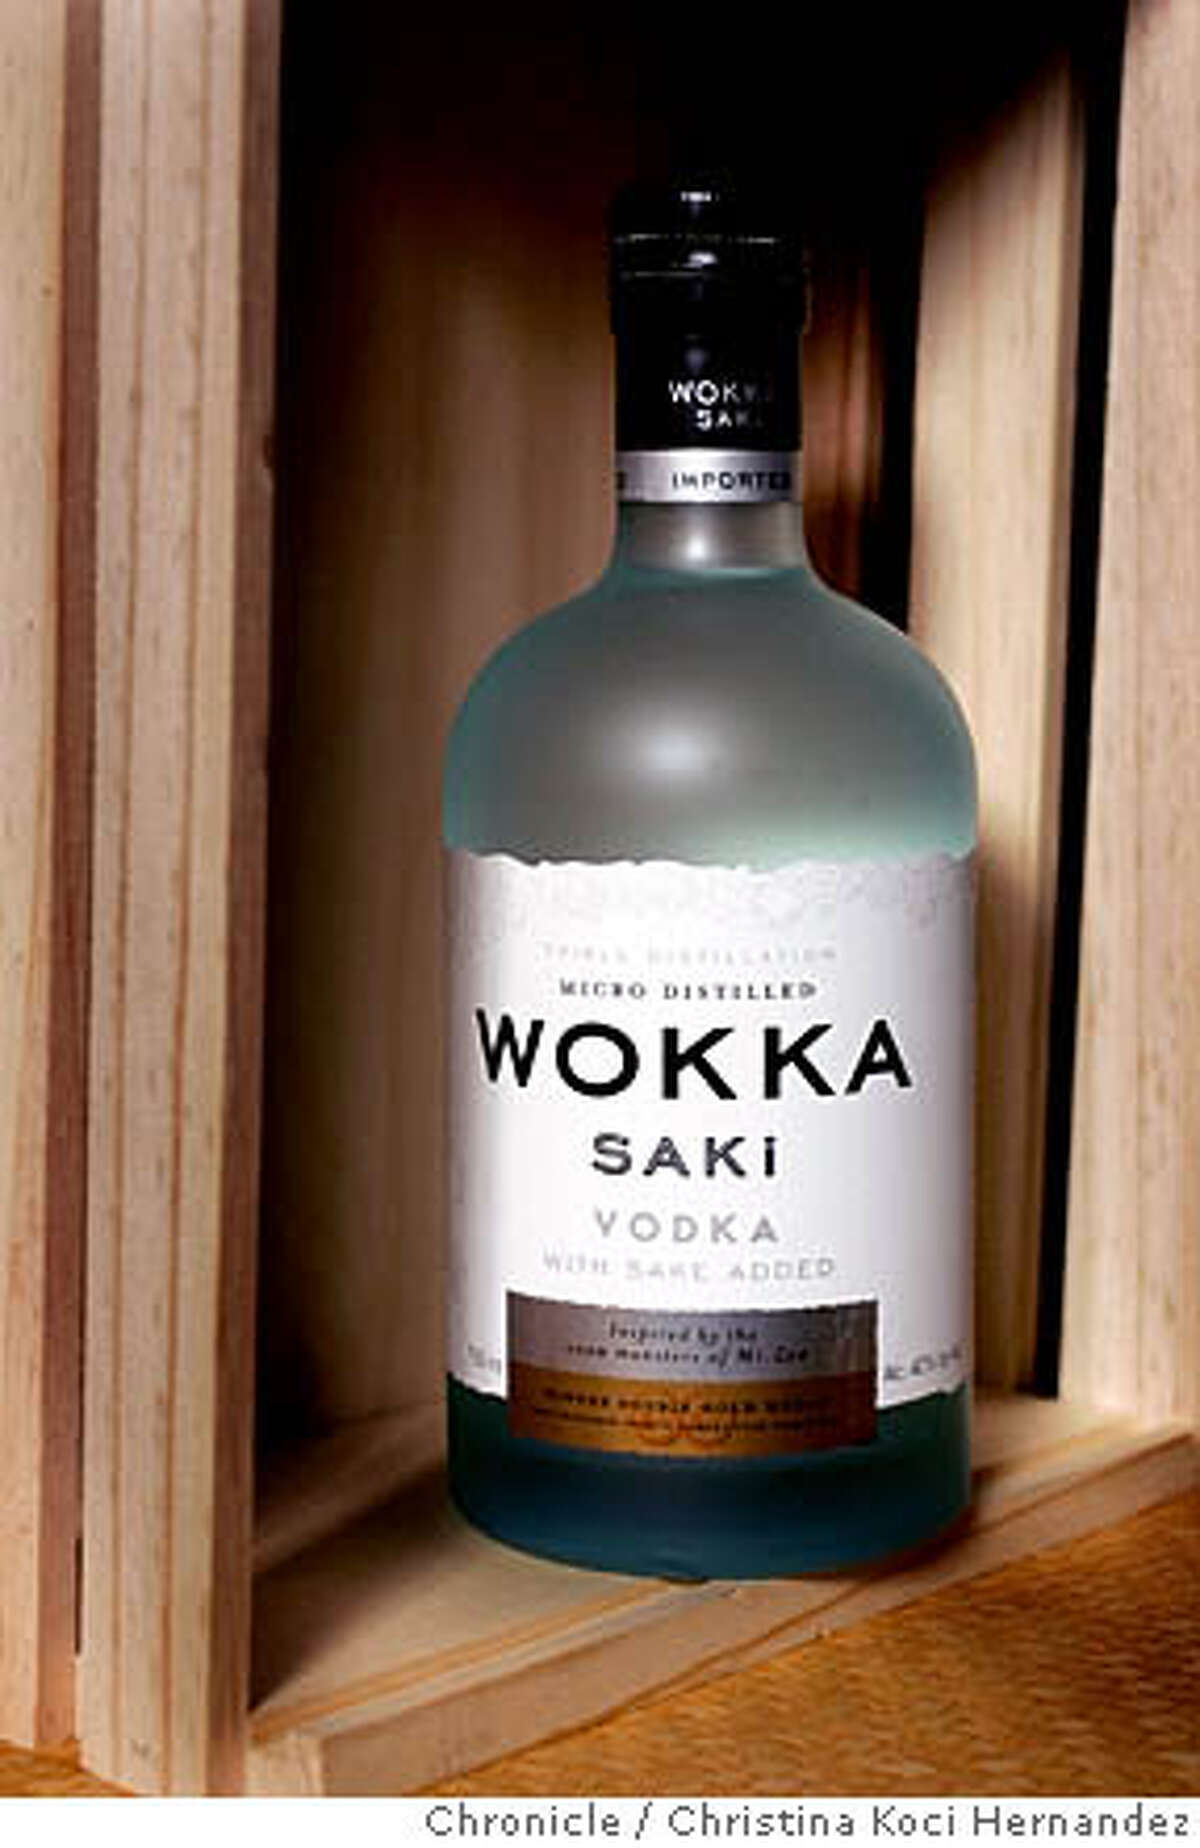 CHRISTINA KOCI HERNANDEZ/CHRONICLE Please shoot a bottle of Wokka Saki Vodka, a blend of vodka and sake.